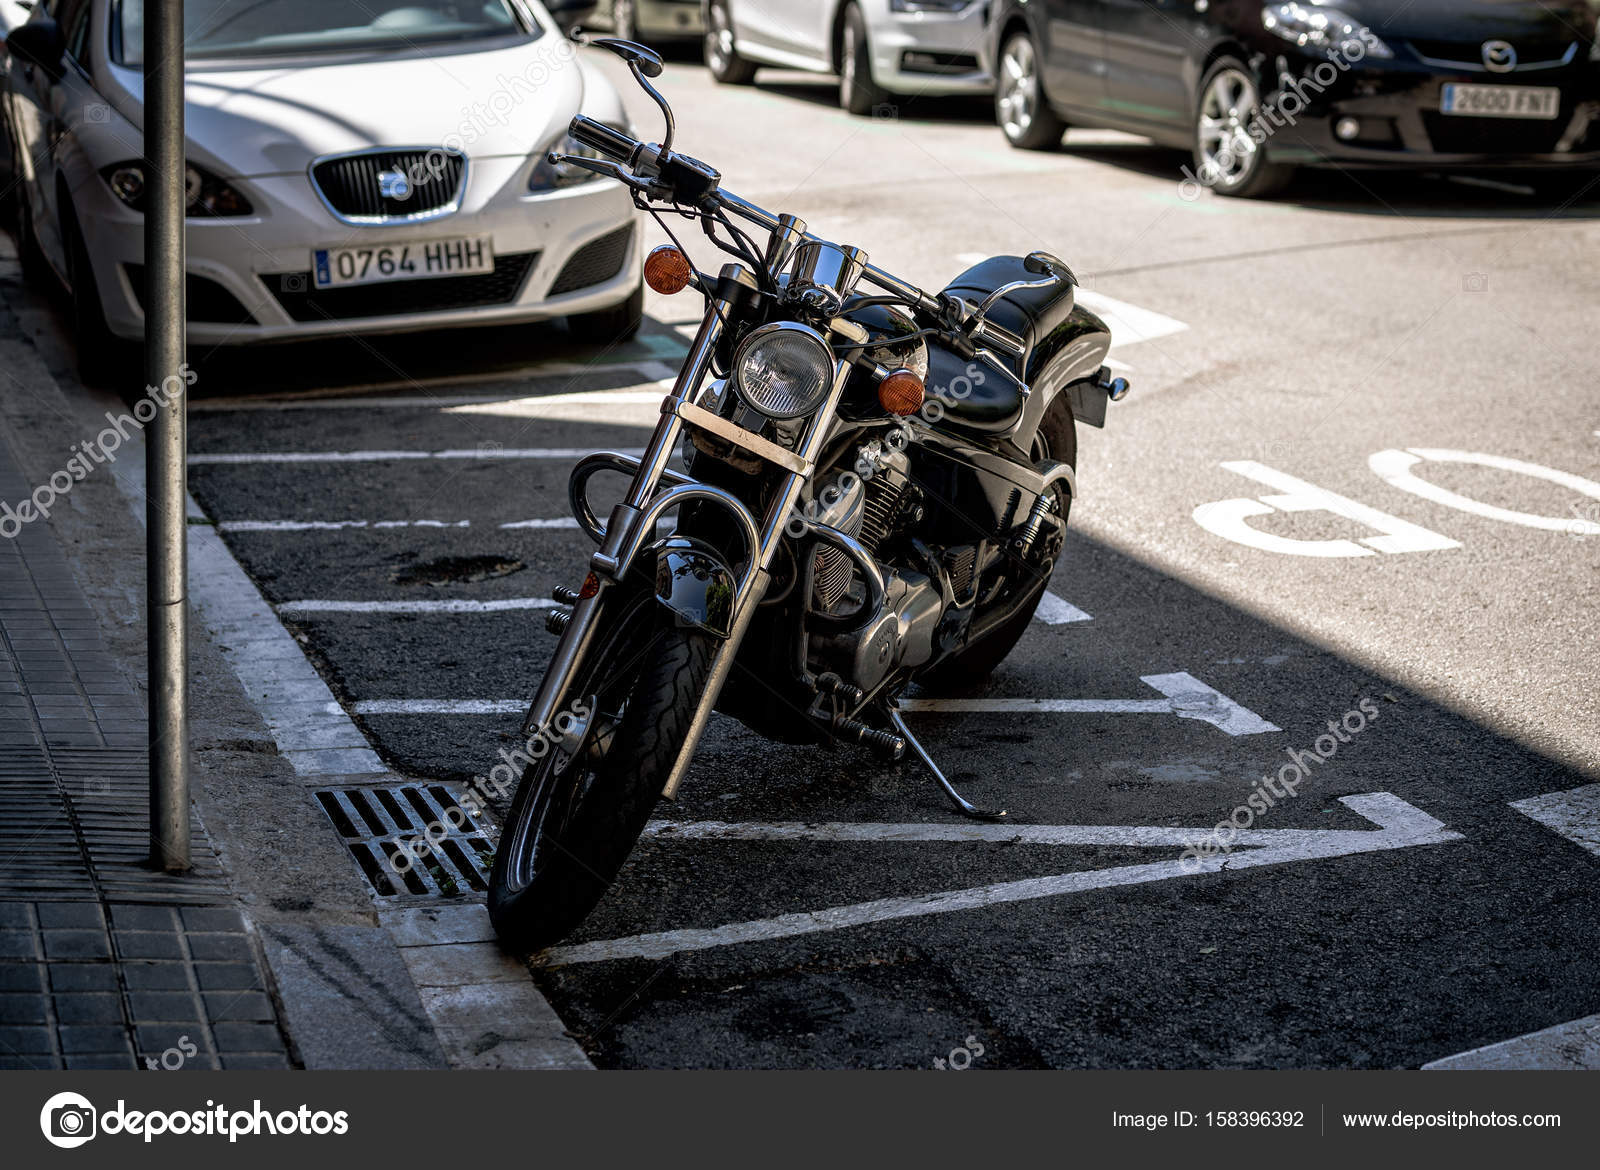 Honda Bike Photography